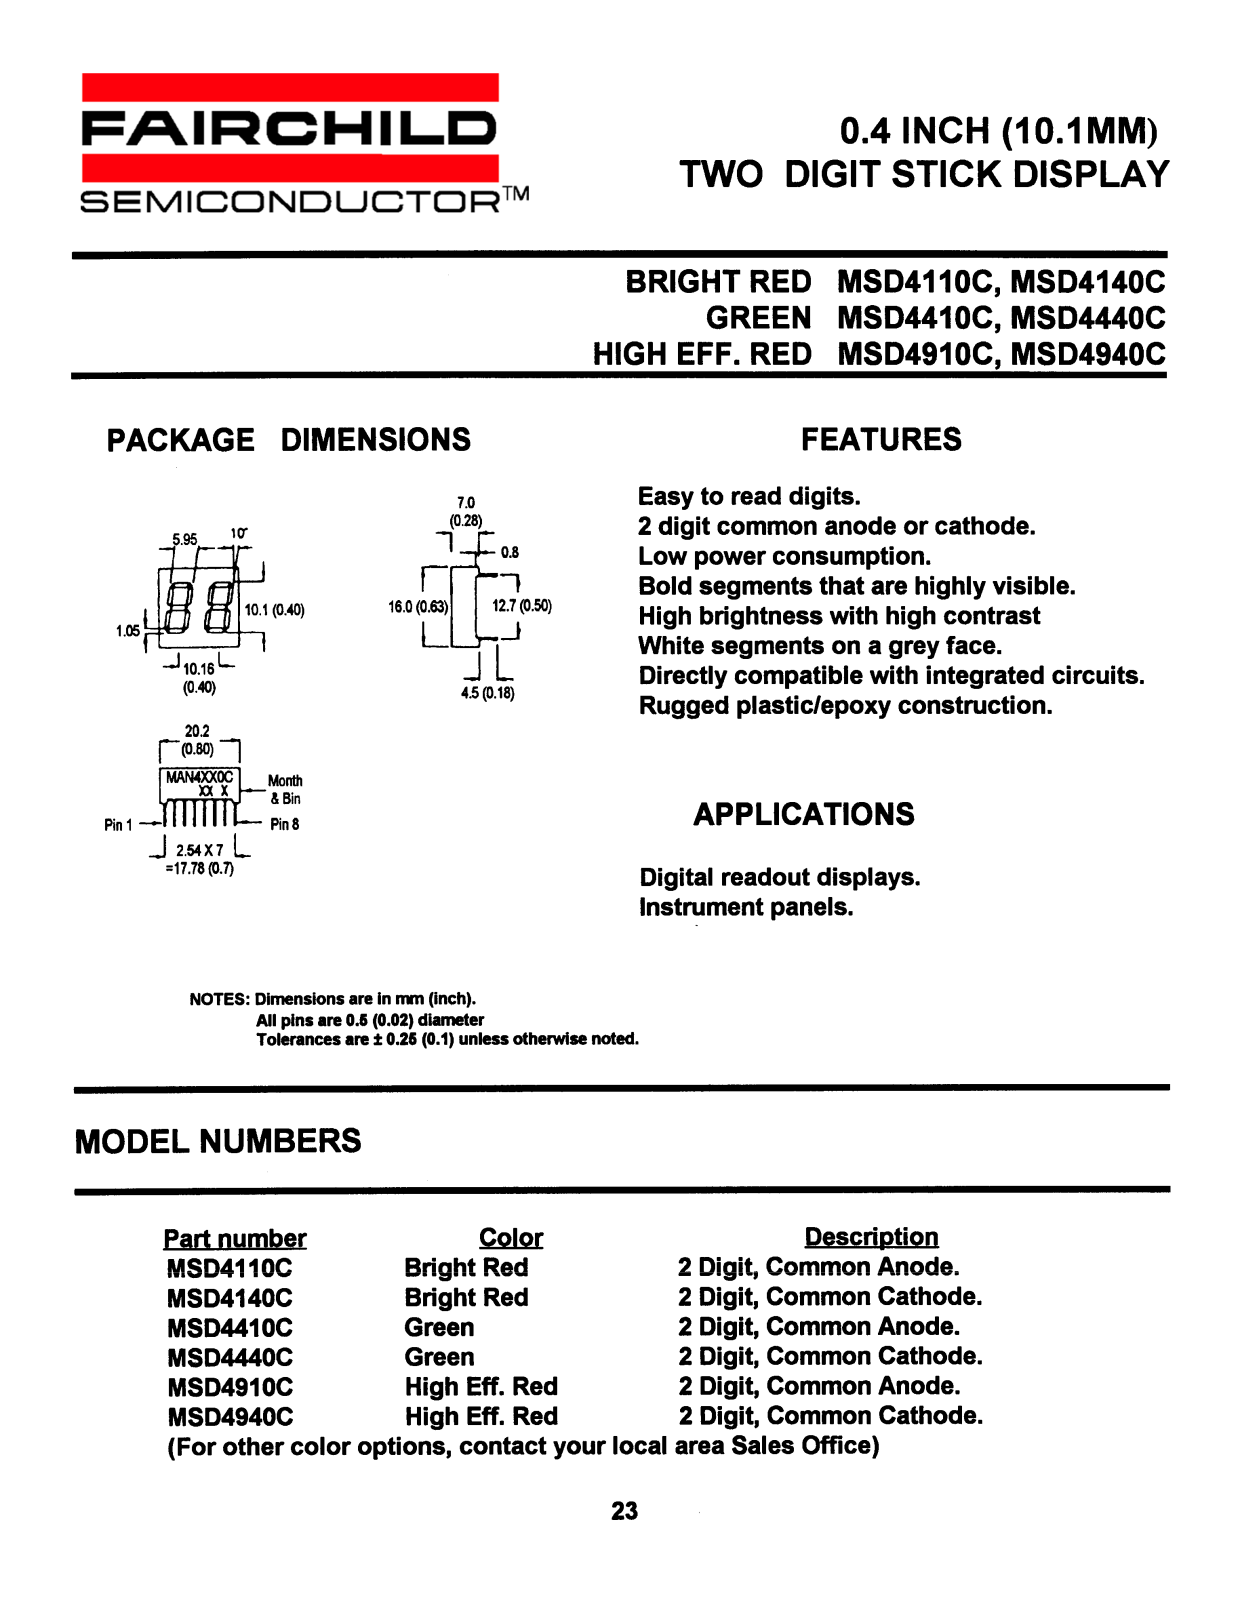 Fairchild Semiconductor MSD4910C, MSD4940C, MSD4440C, MSD4140C, MSD4110C Datasheet